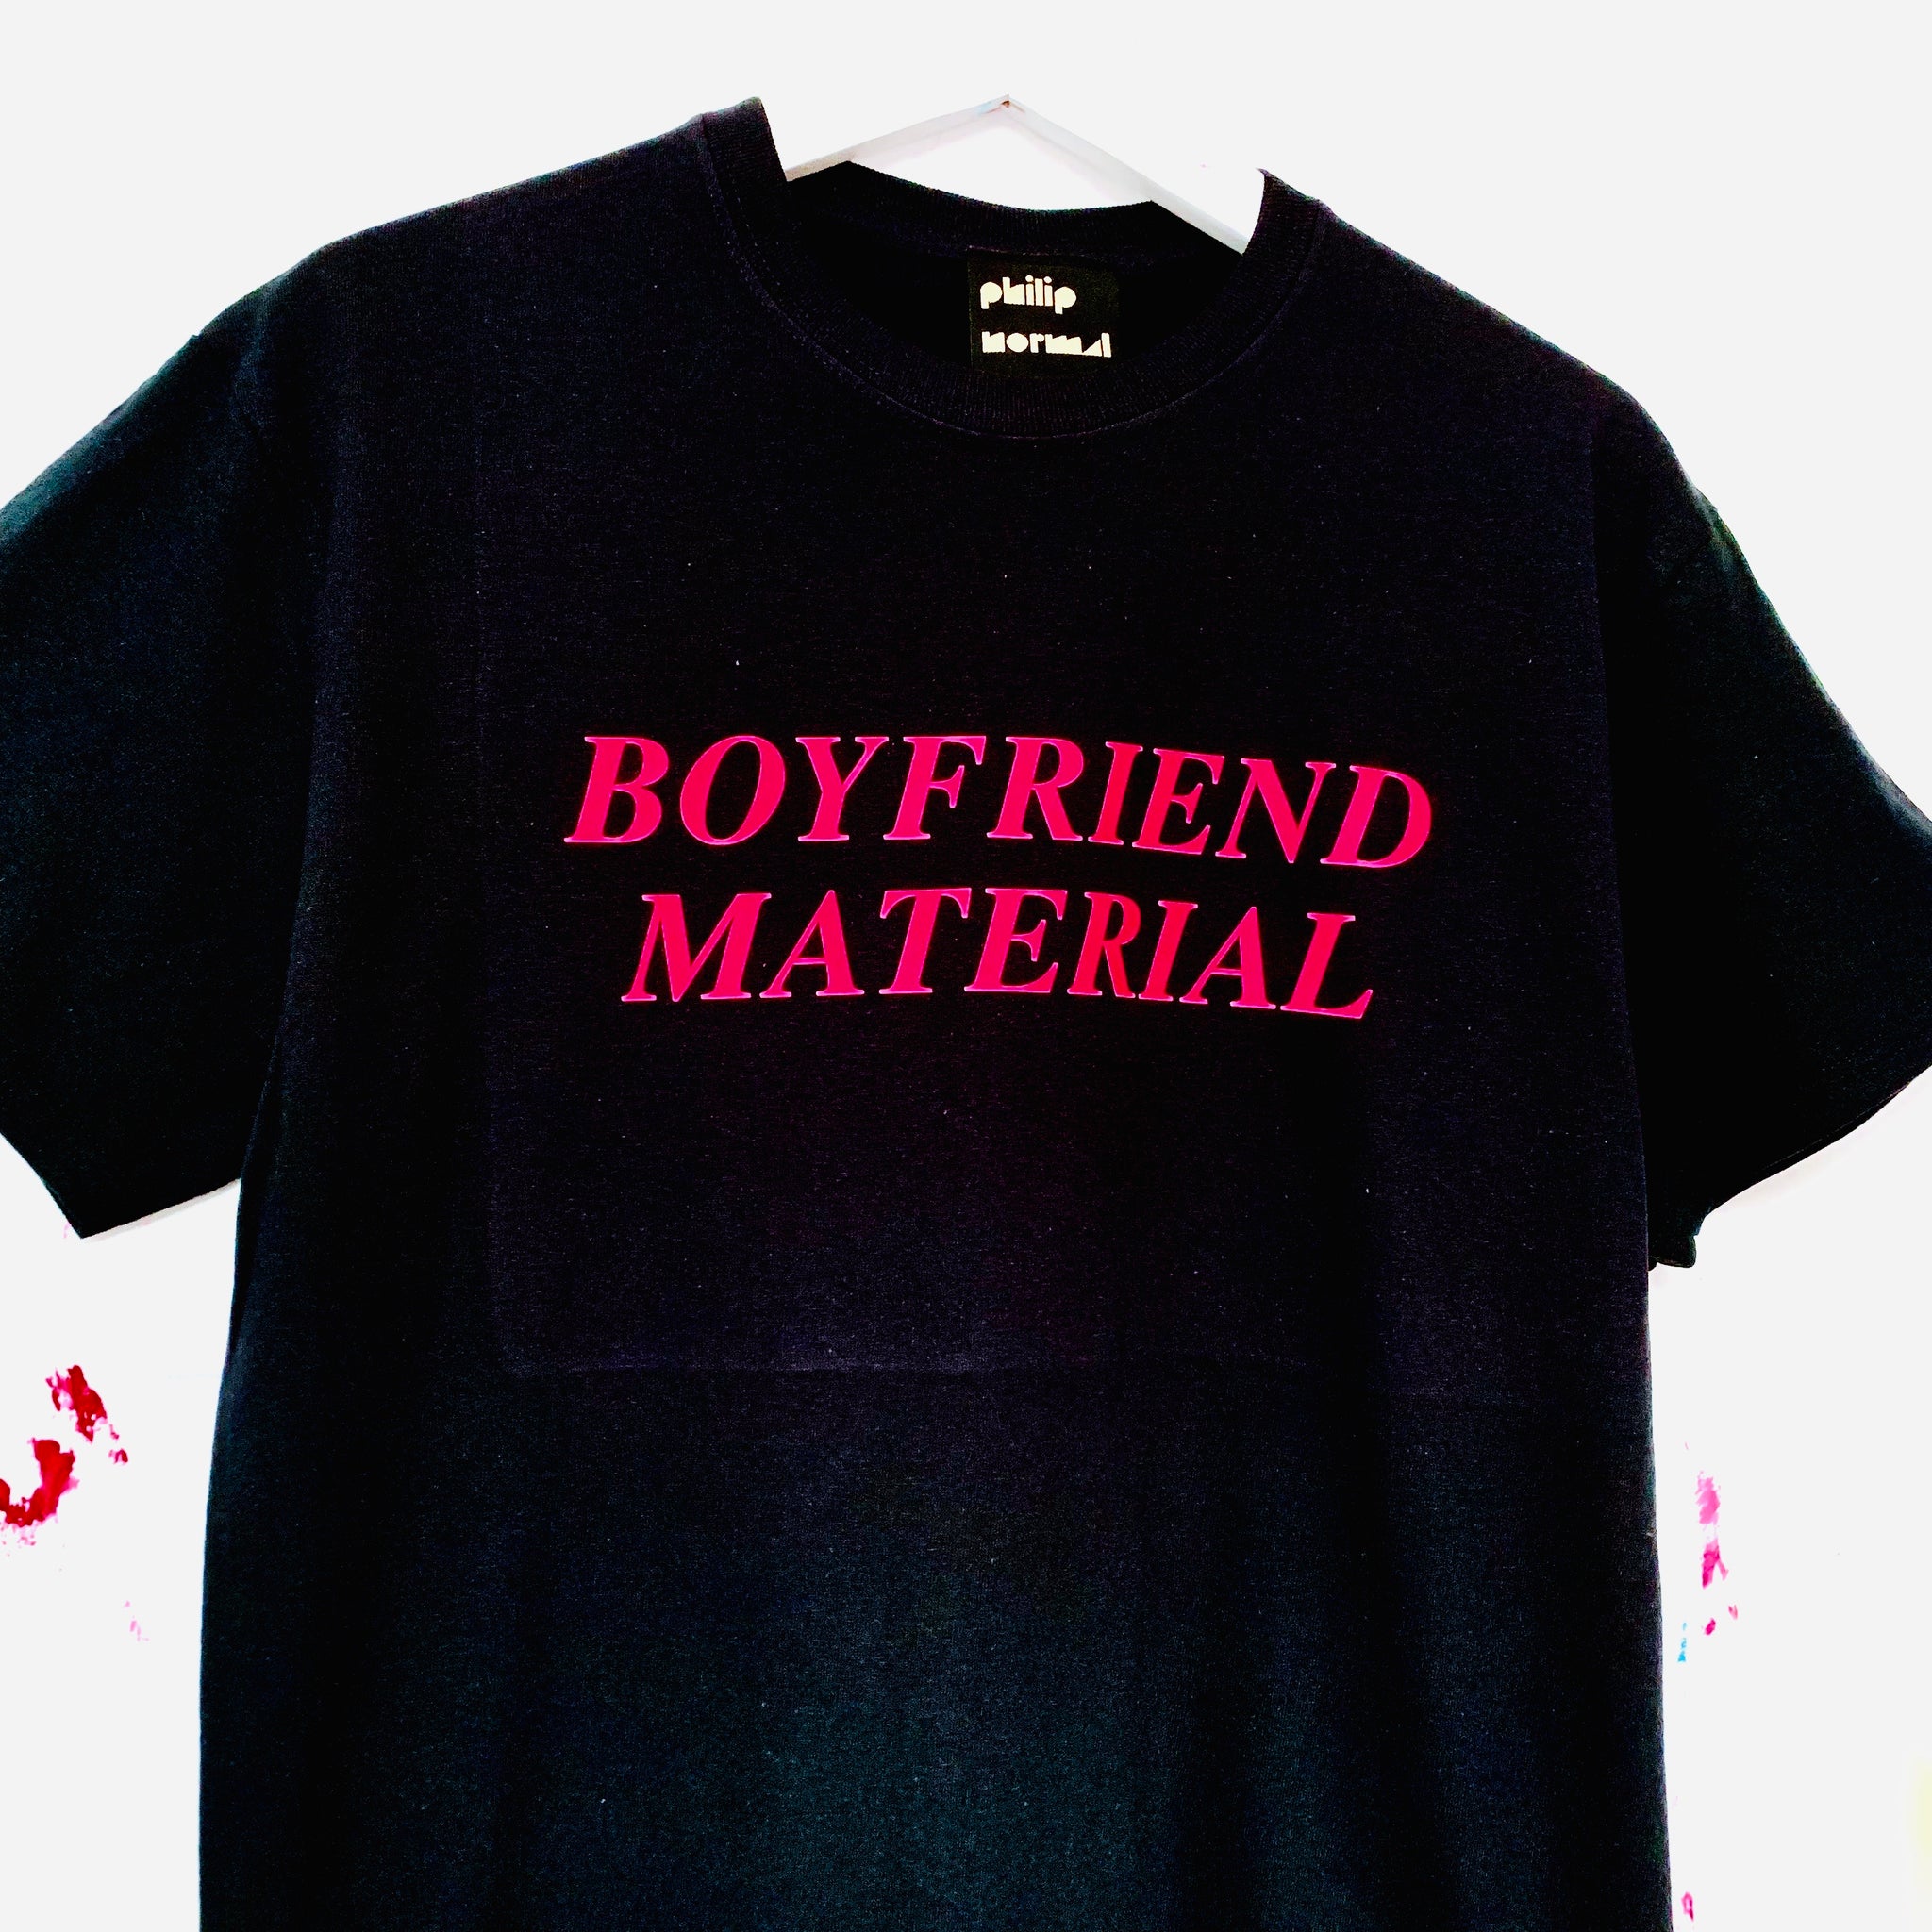 BOYFRIEND MATERIAL T-Shirt – Philip Normal